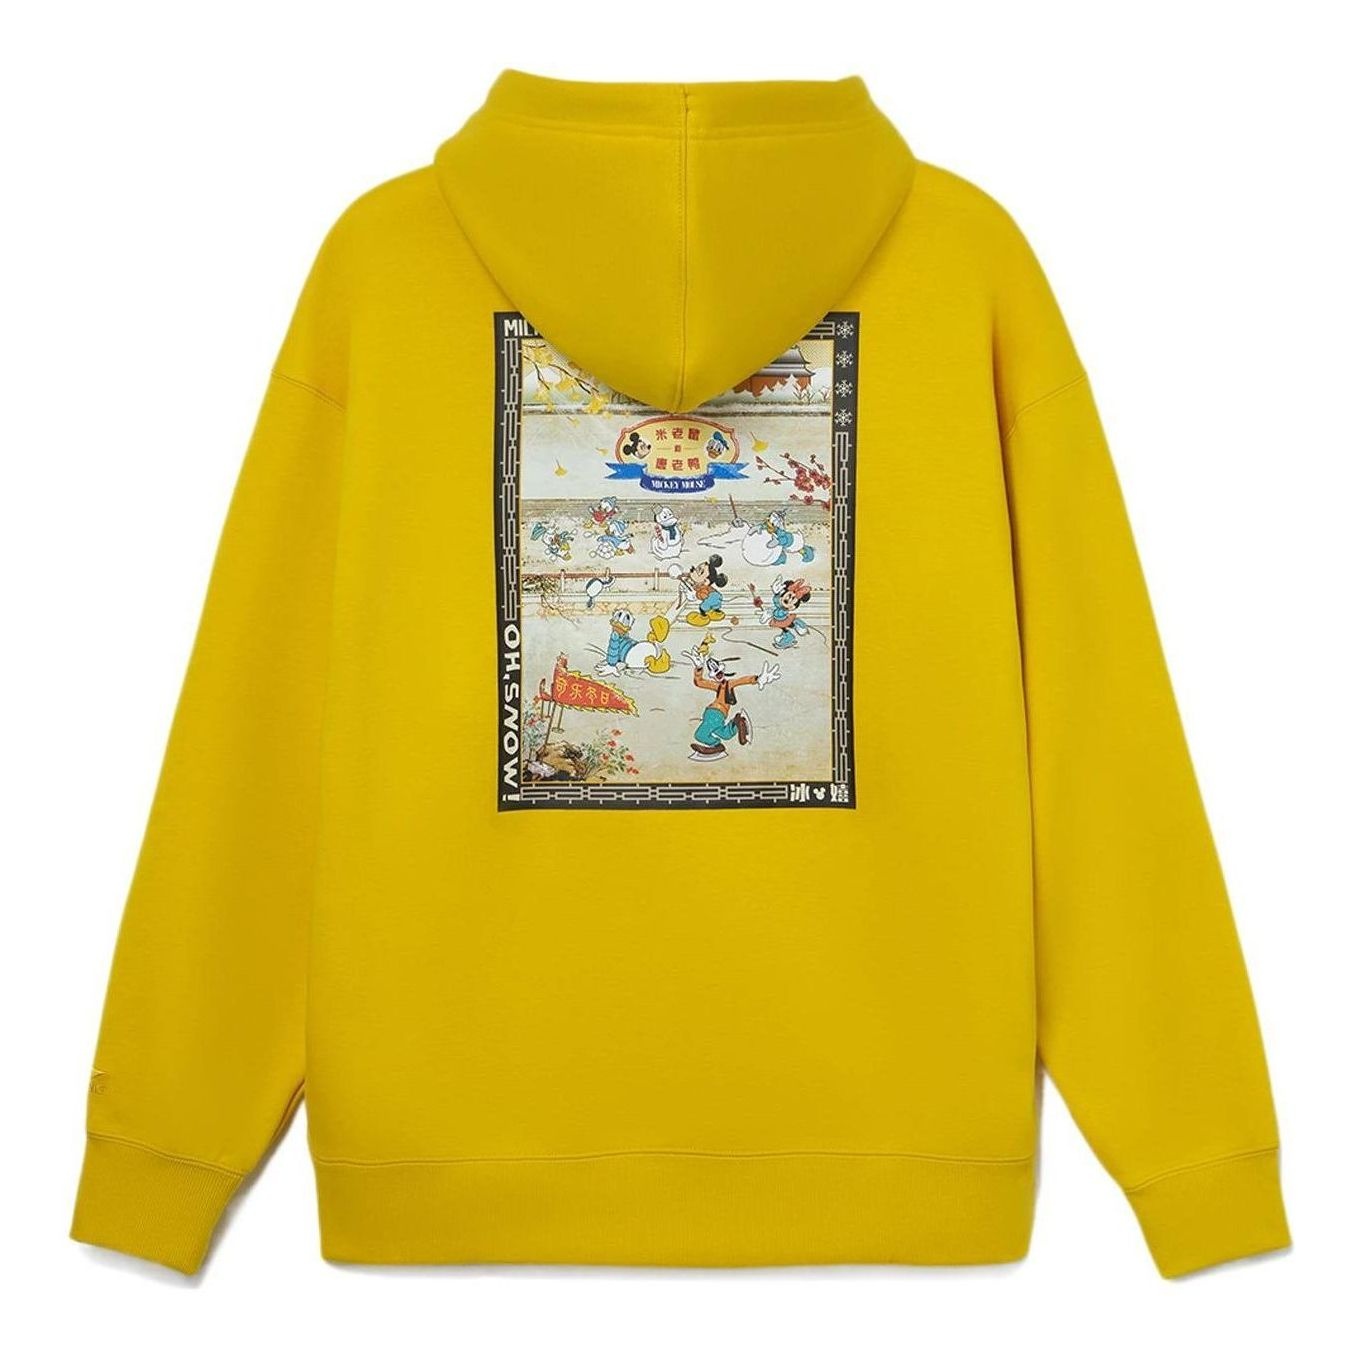 Li-Ning x Disney Graphic Hoodie 'Yellow' AWDR687-4 - 2